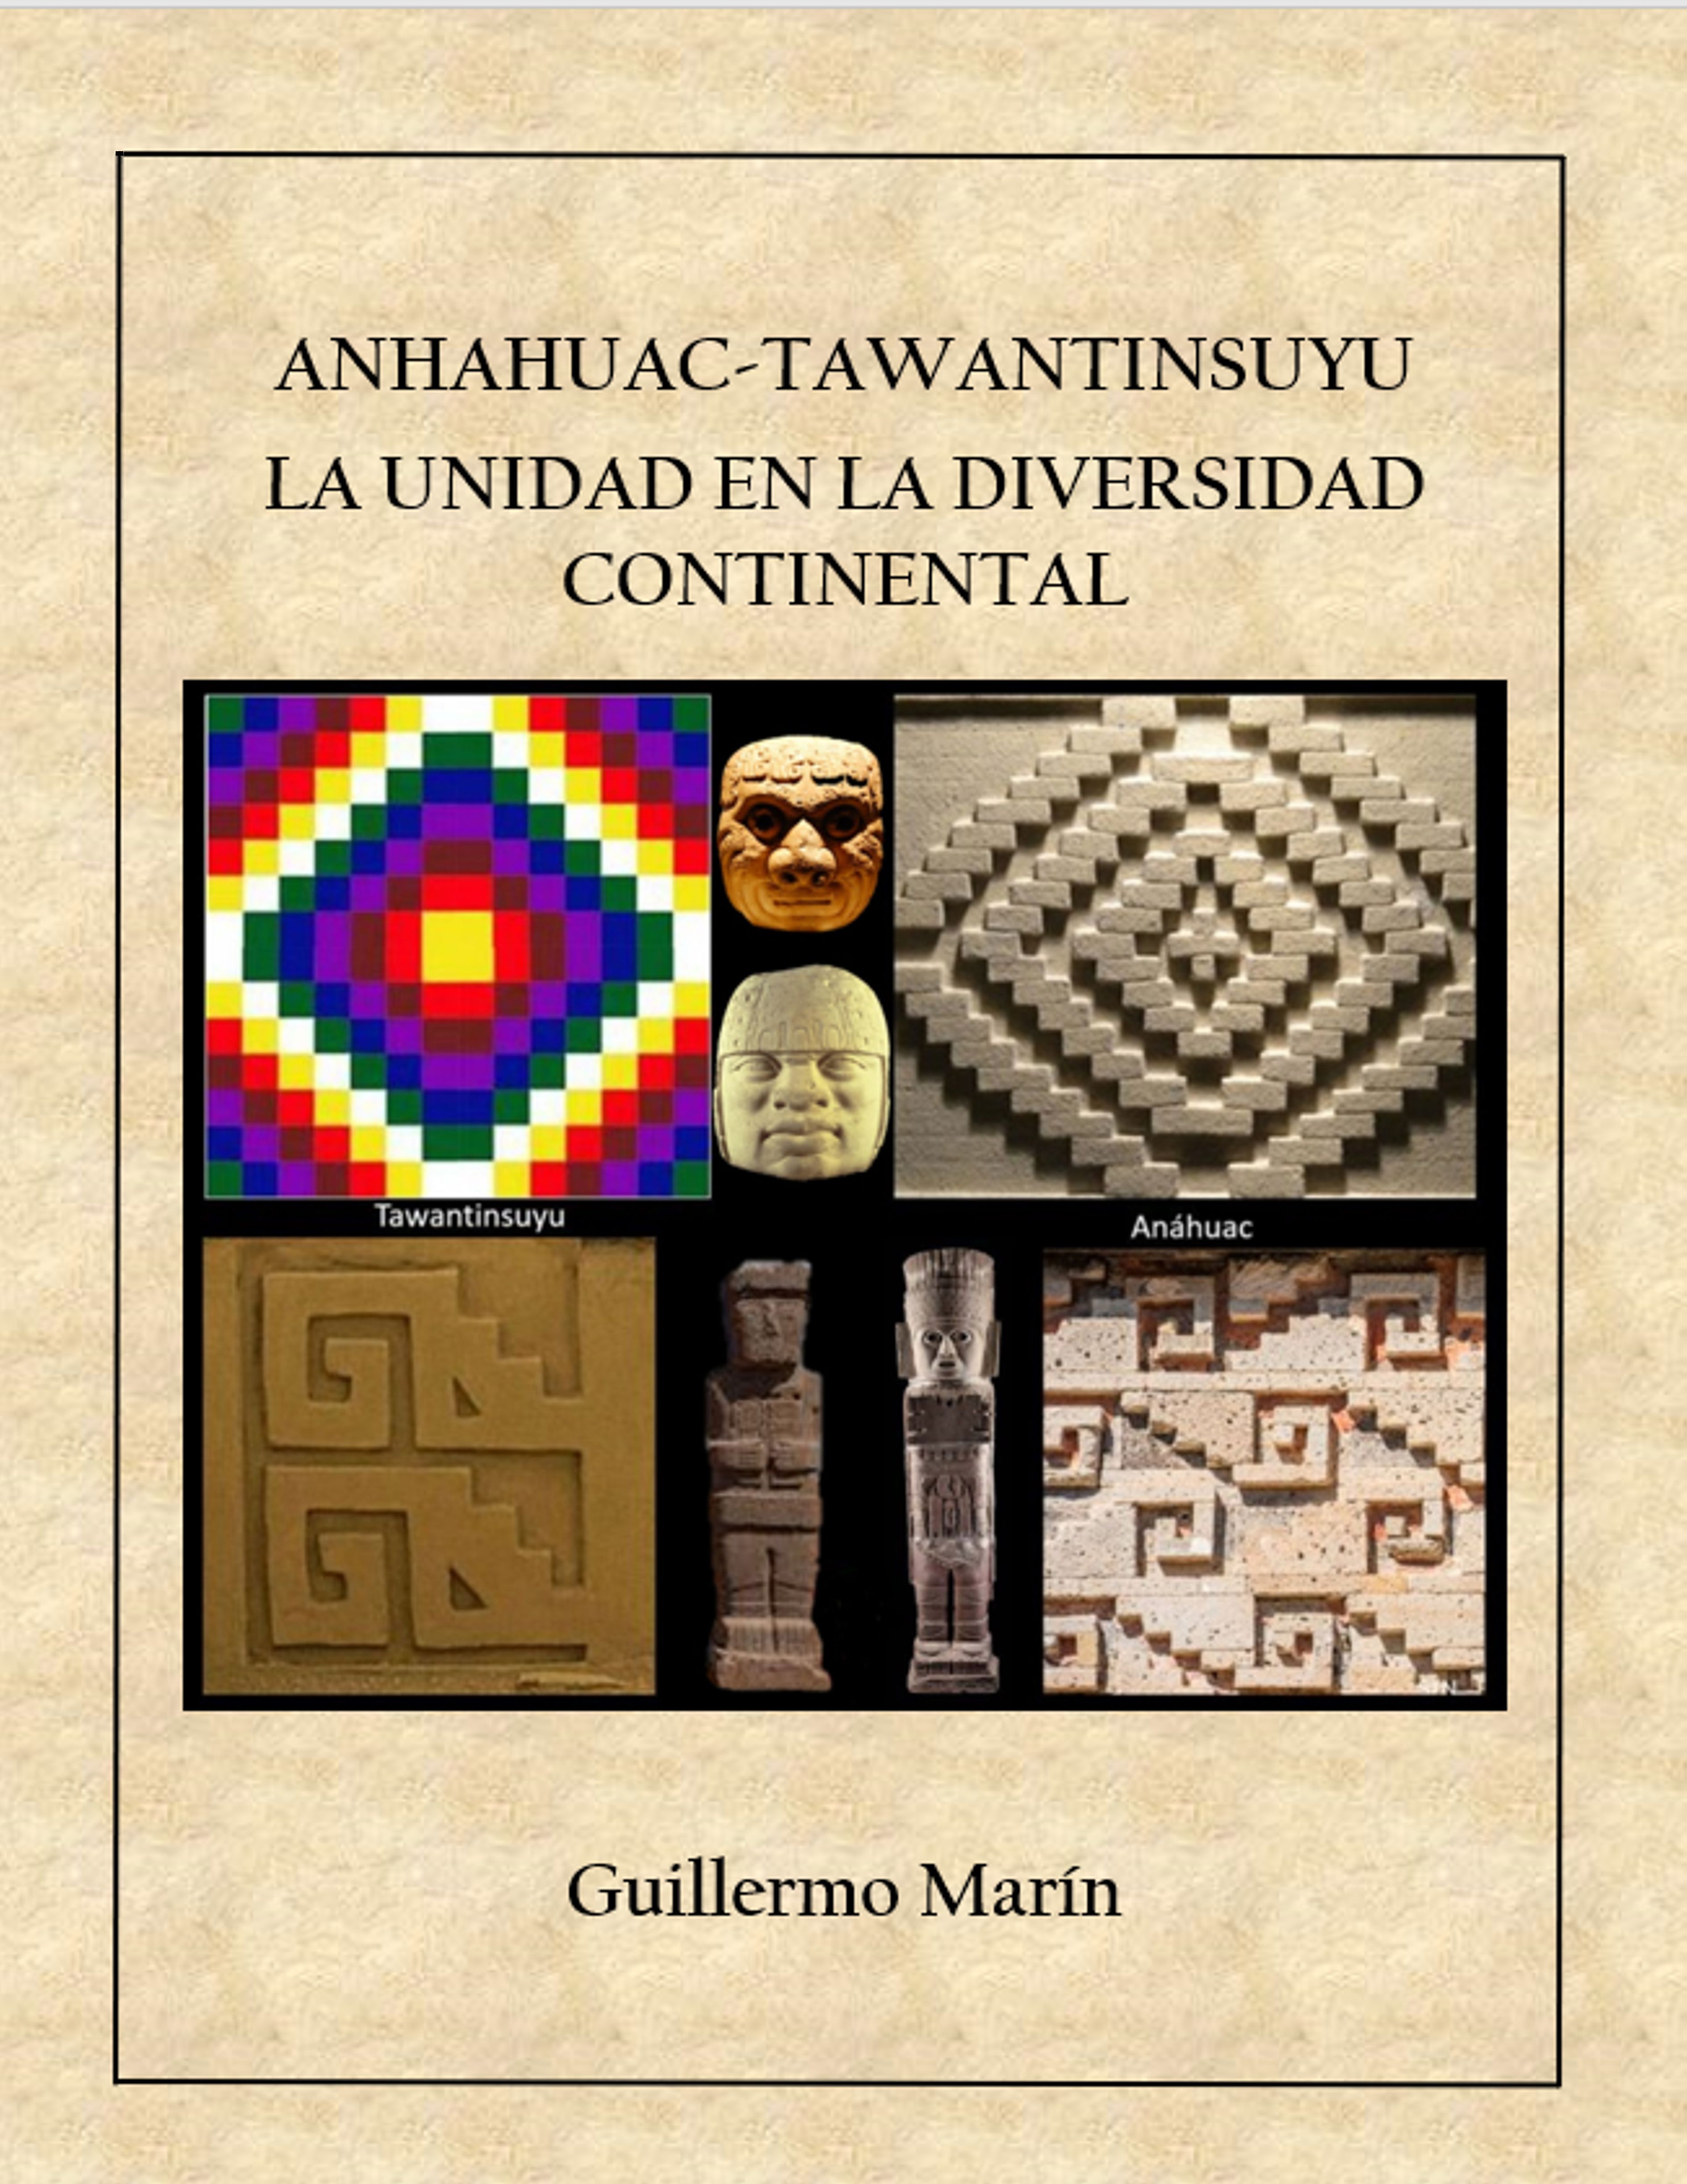 ANAHUAC - TAWANTINSUYO<br>UNITY IN CONTINENTAL DIVERSITY<br>